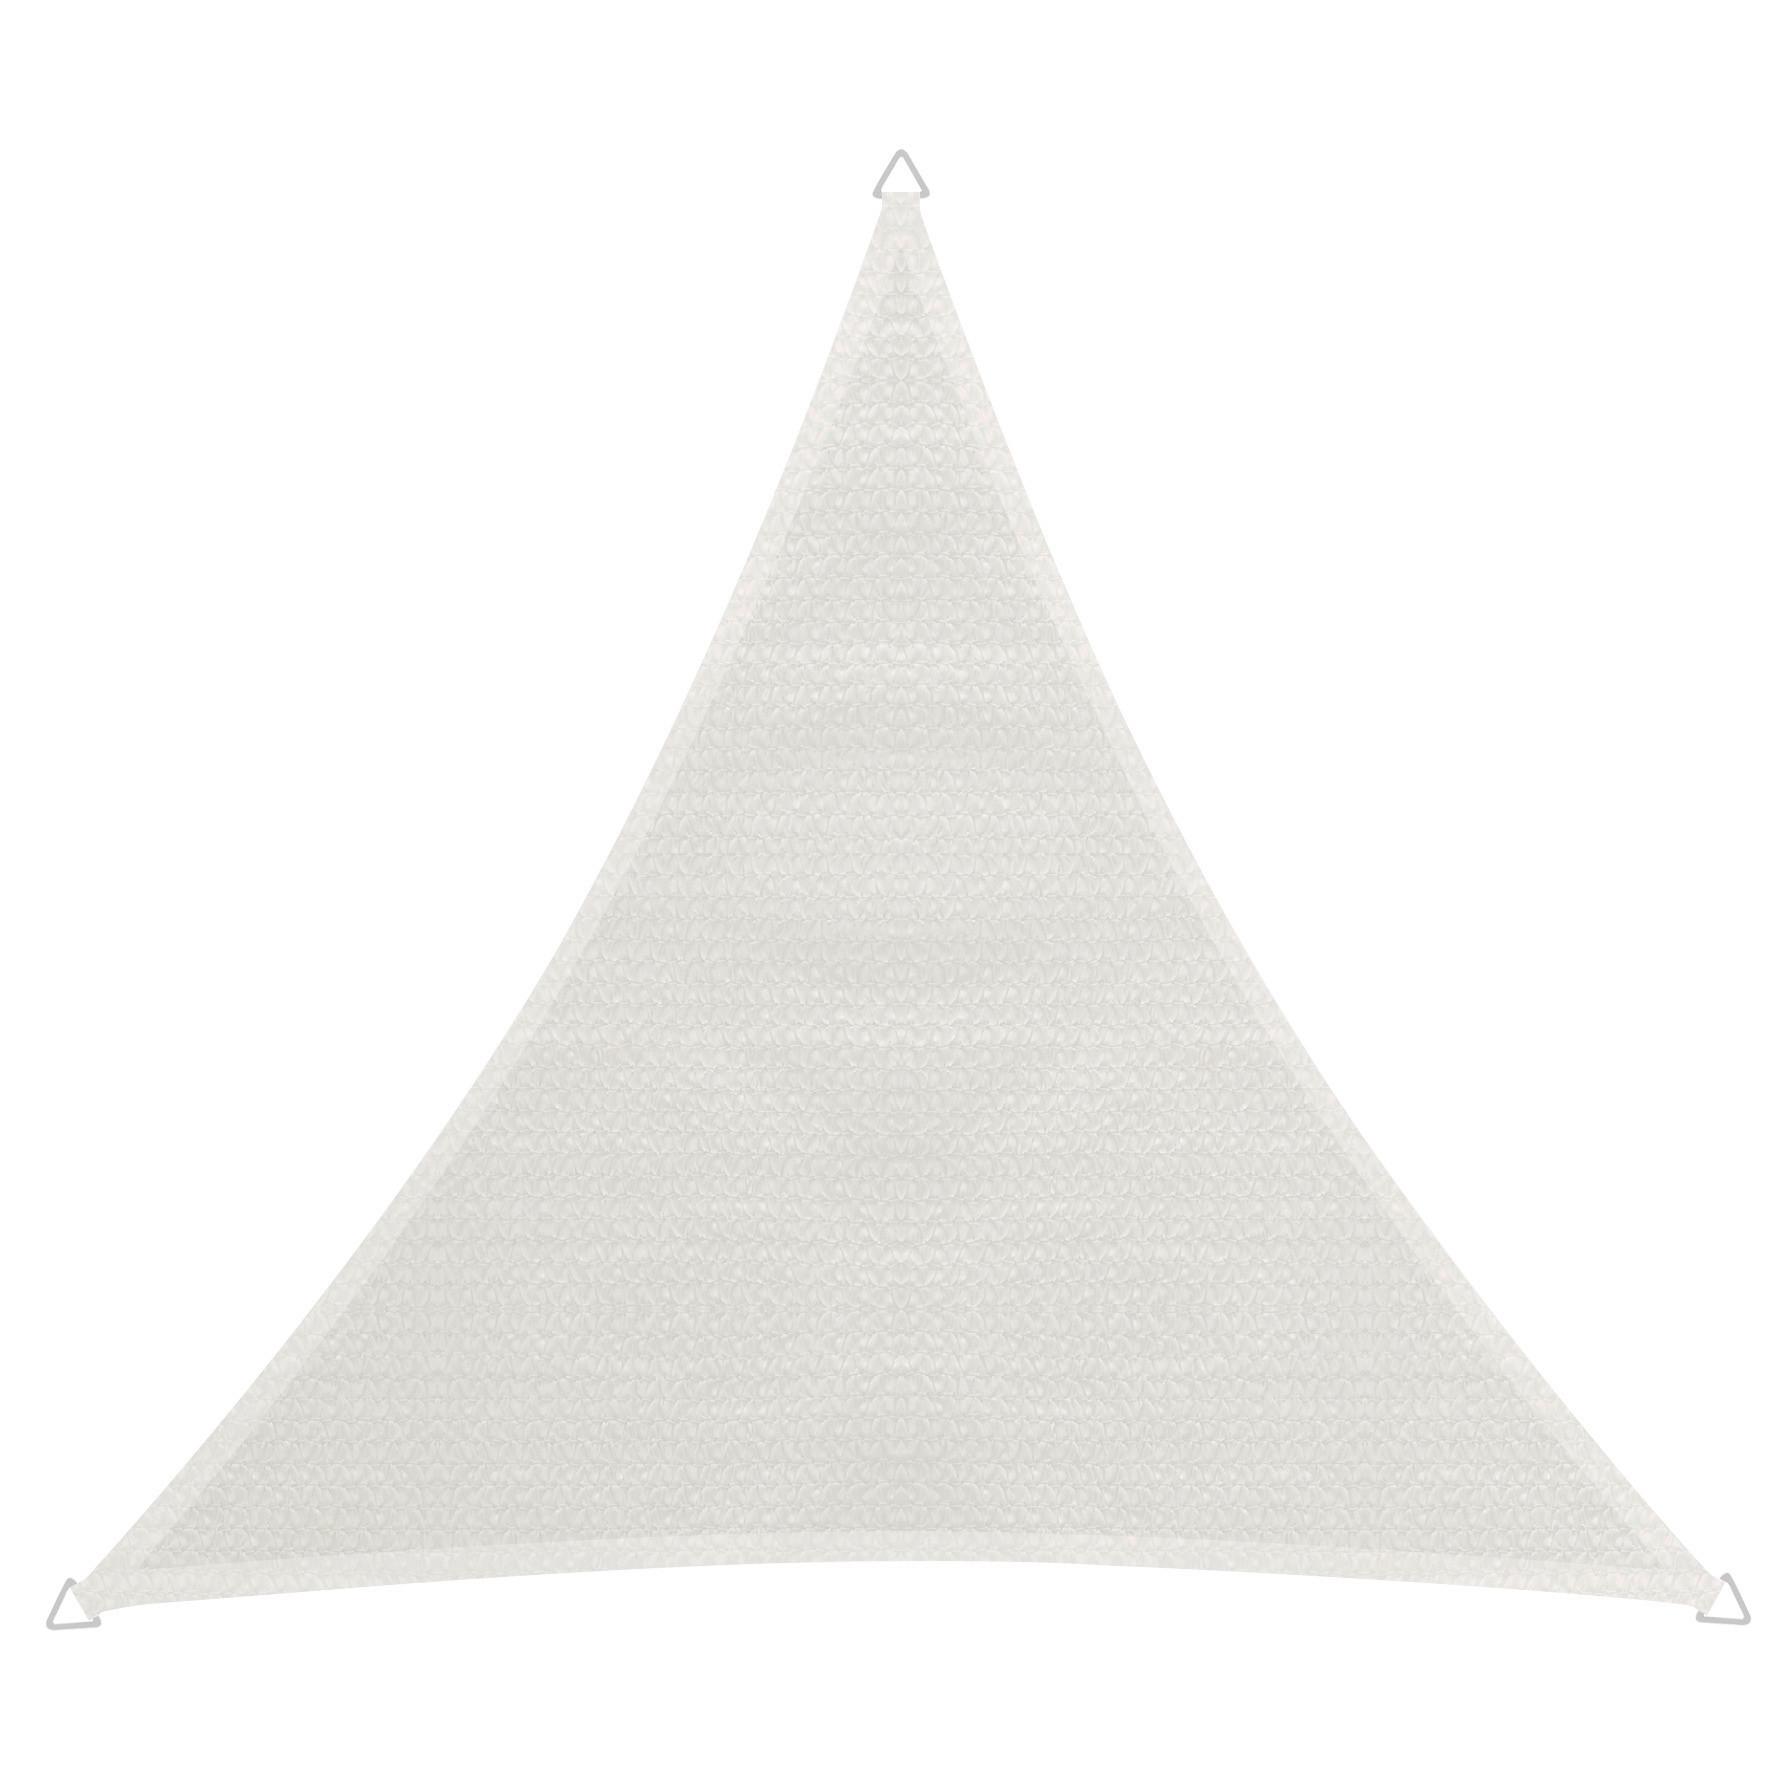 Sonnensegel Dreieck 5x5x5 m Capri Dr - Weiß, Basics, Kunststoff (500/500/500cm) - Windhager